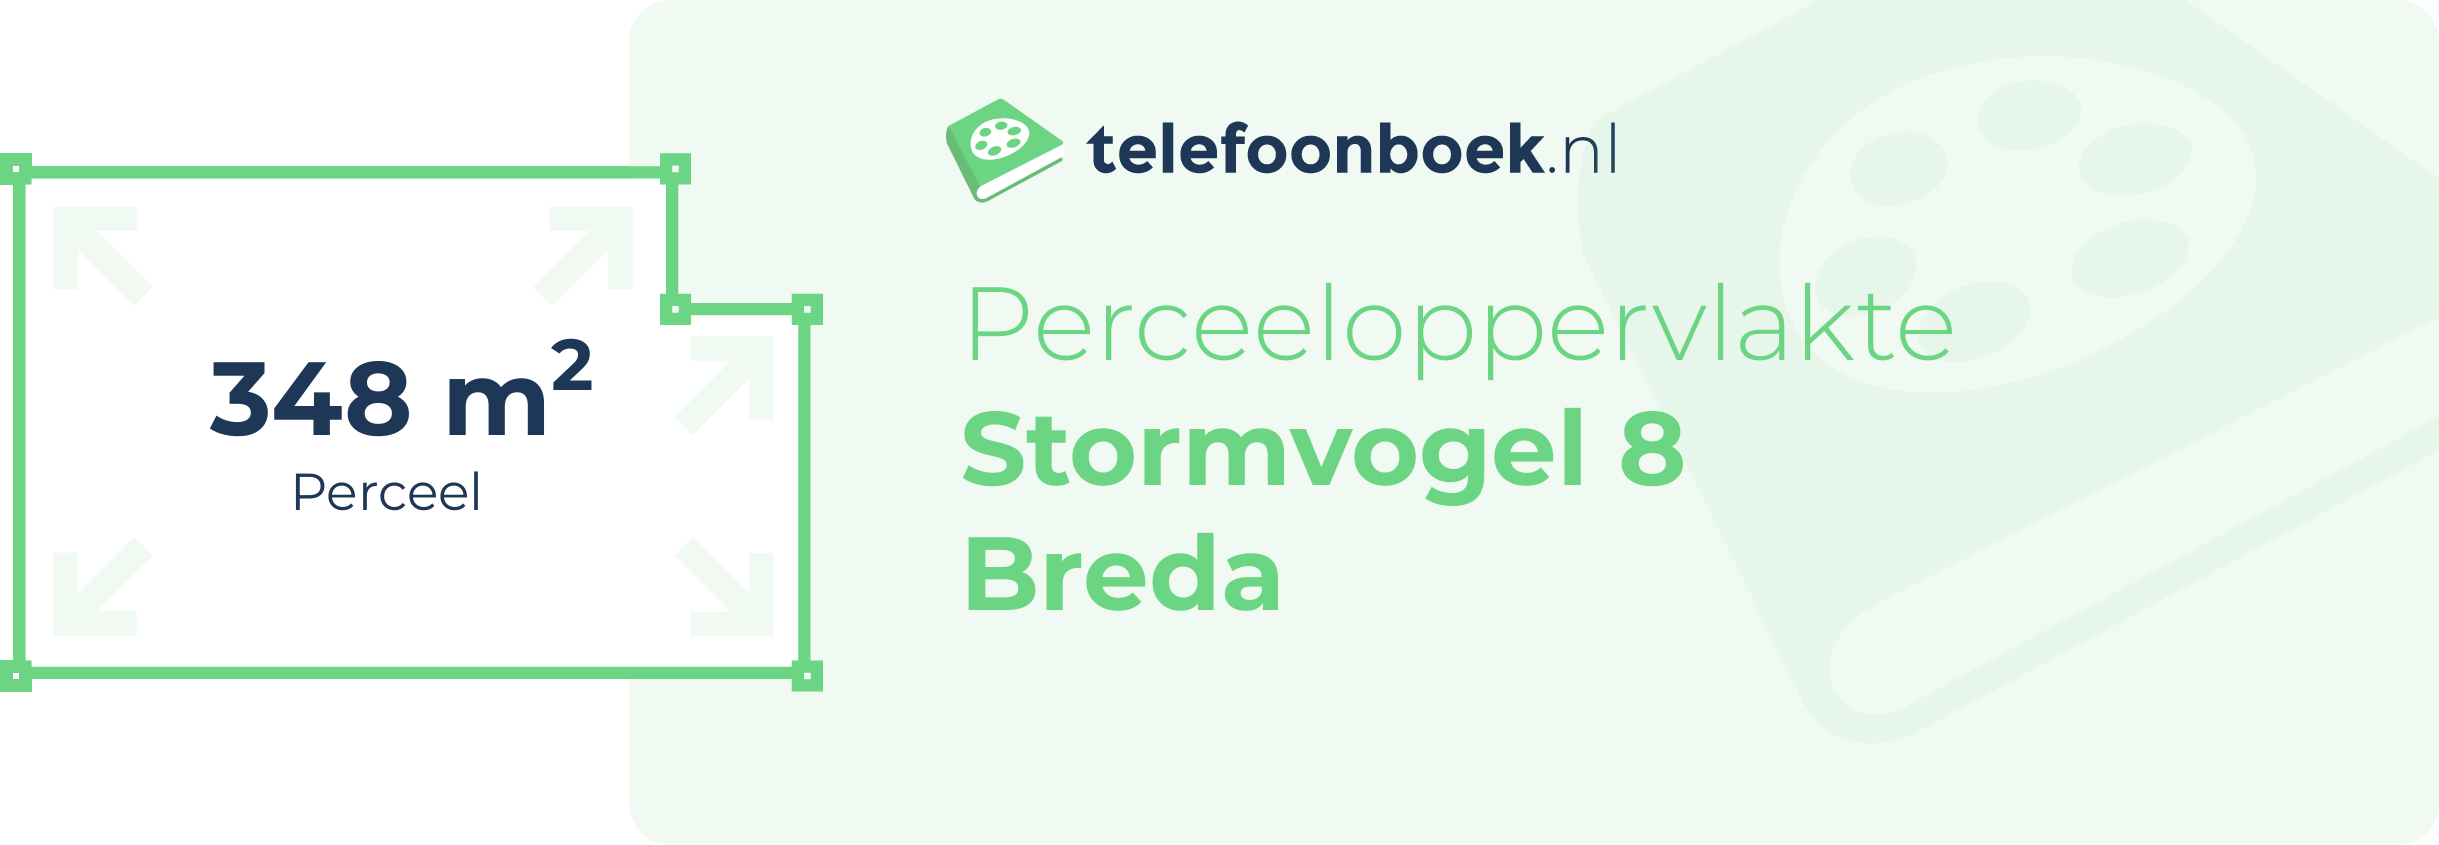 Perceeloppervlakte Stormvogel 8 Breda